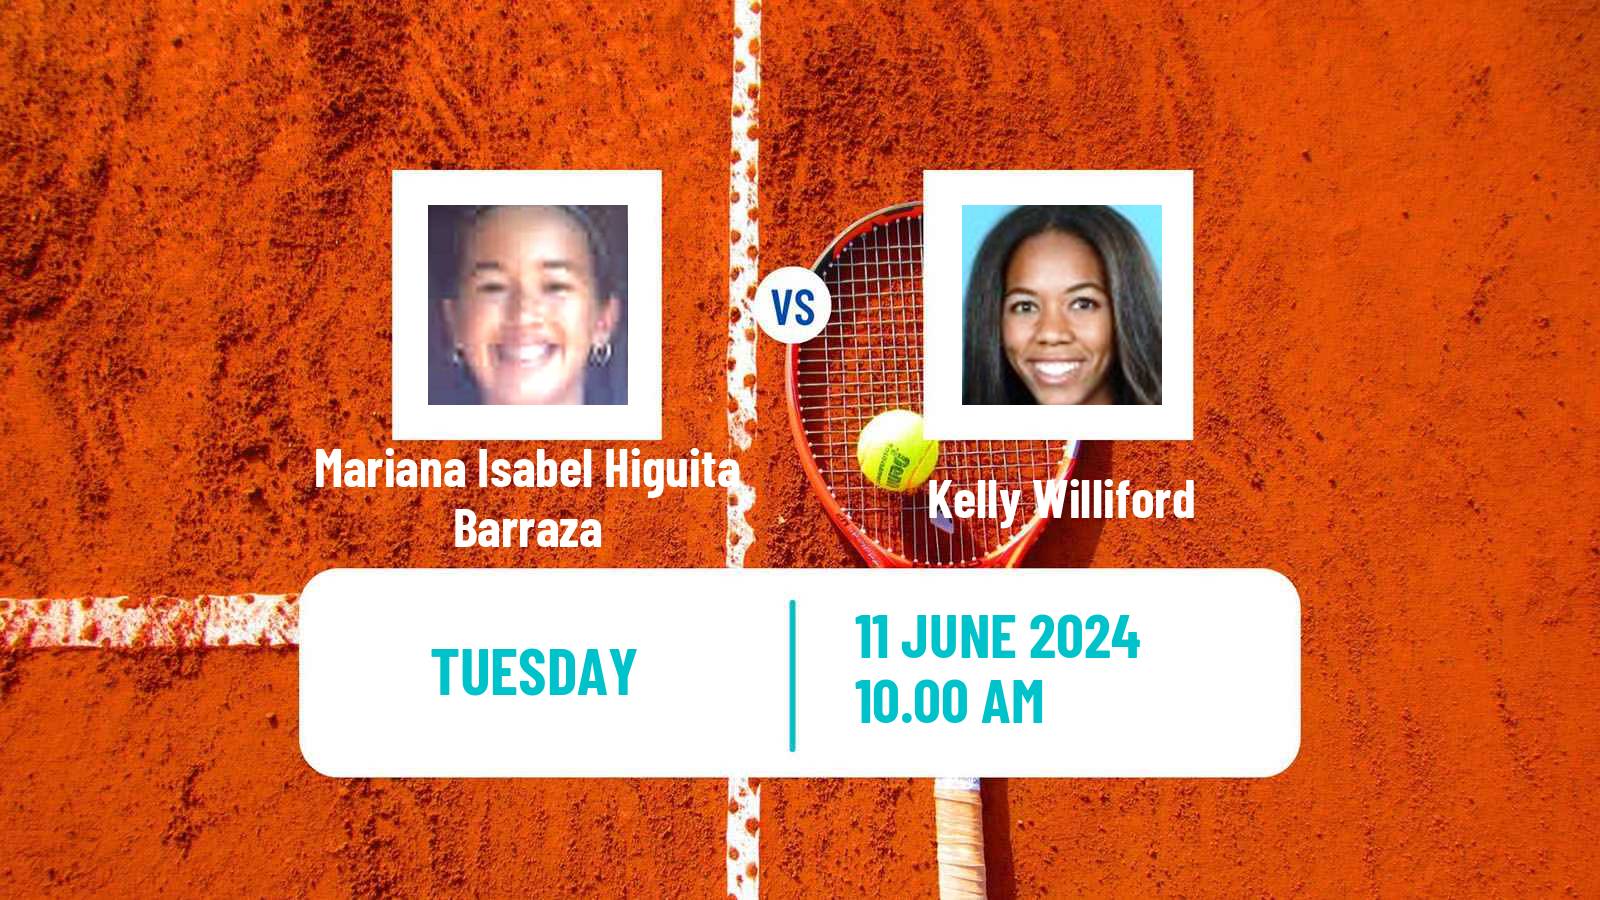 Tennis ITF W15 Santo Domingo 2 Women Mariana Isabel Higuita Barraza - Kelly Williford